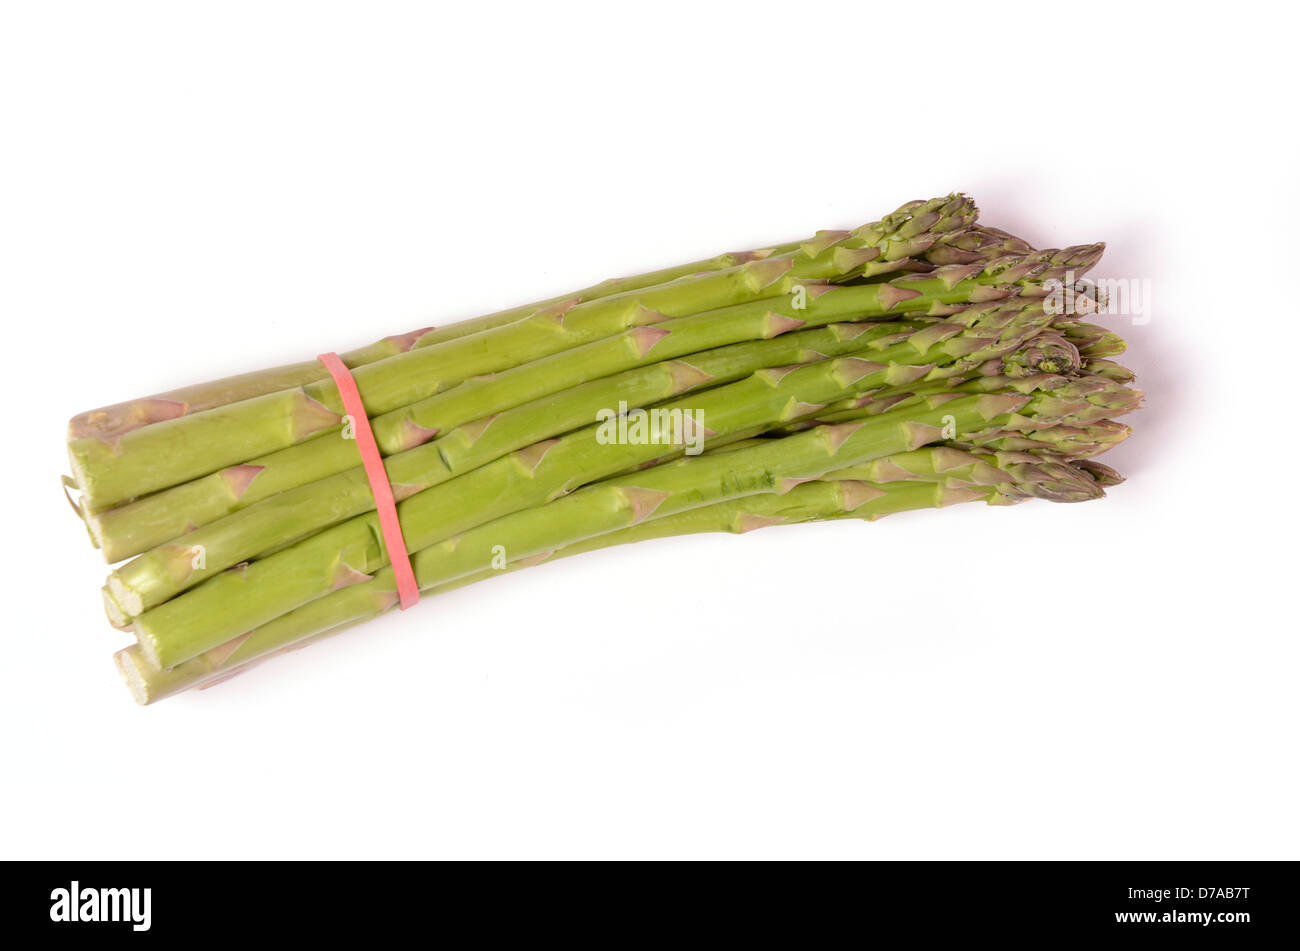 Gli asparagi verdi su sfondo bianco Foto Stock